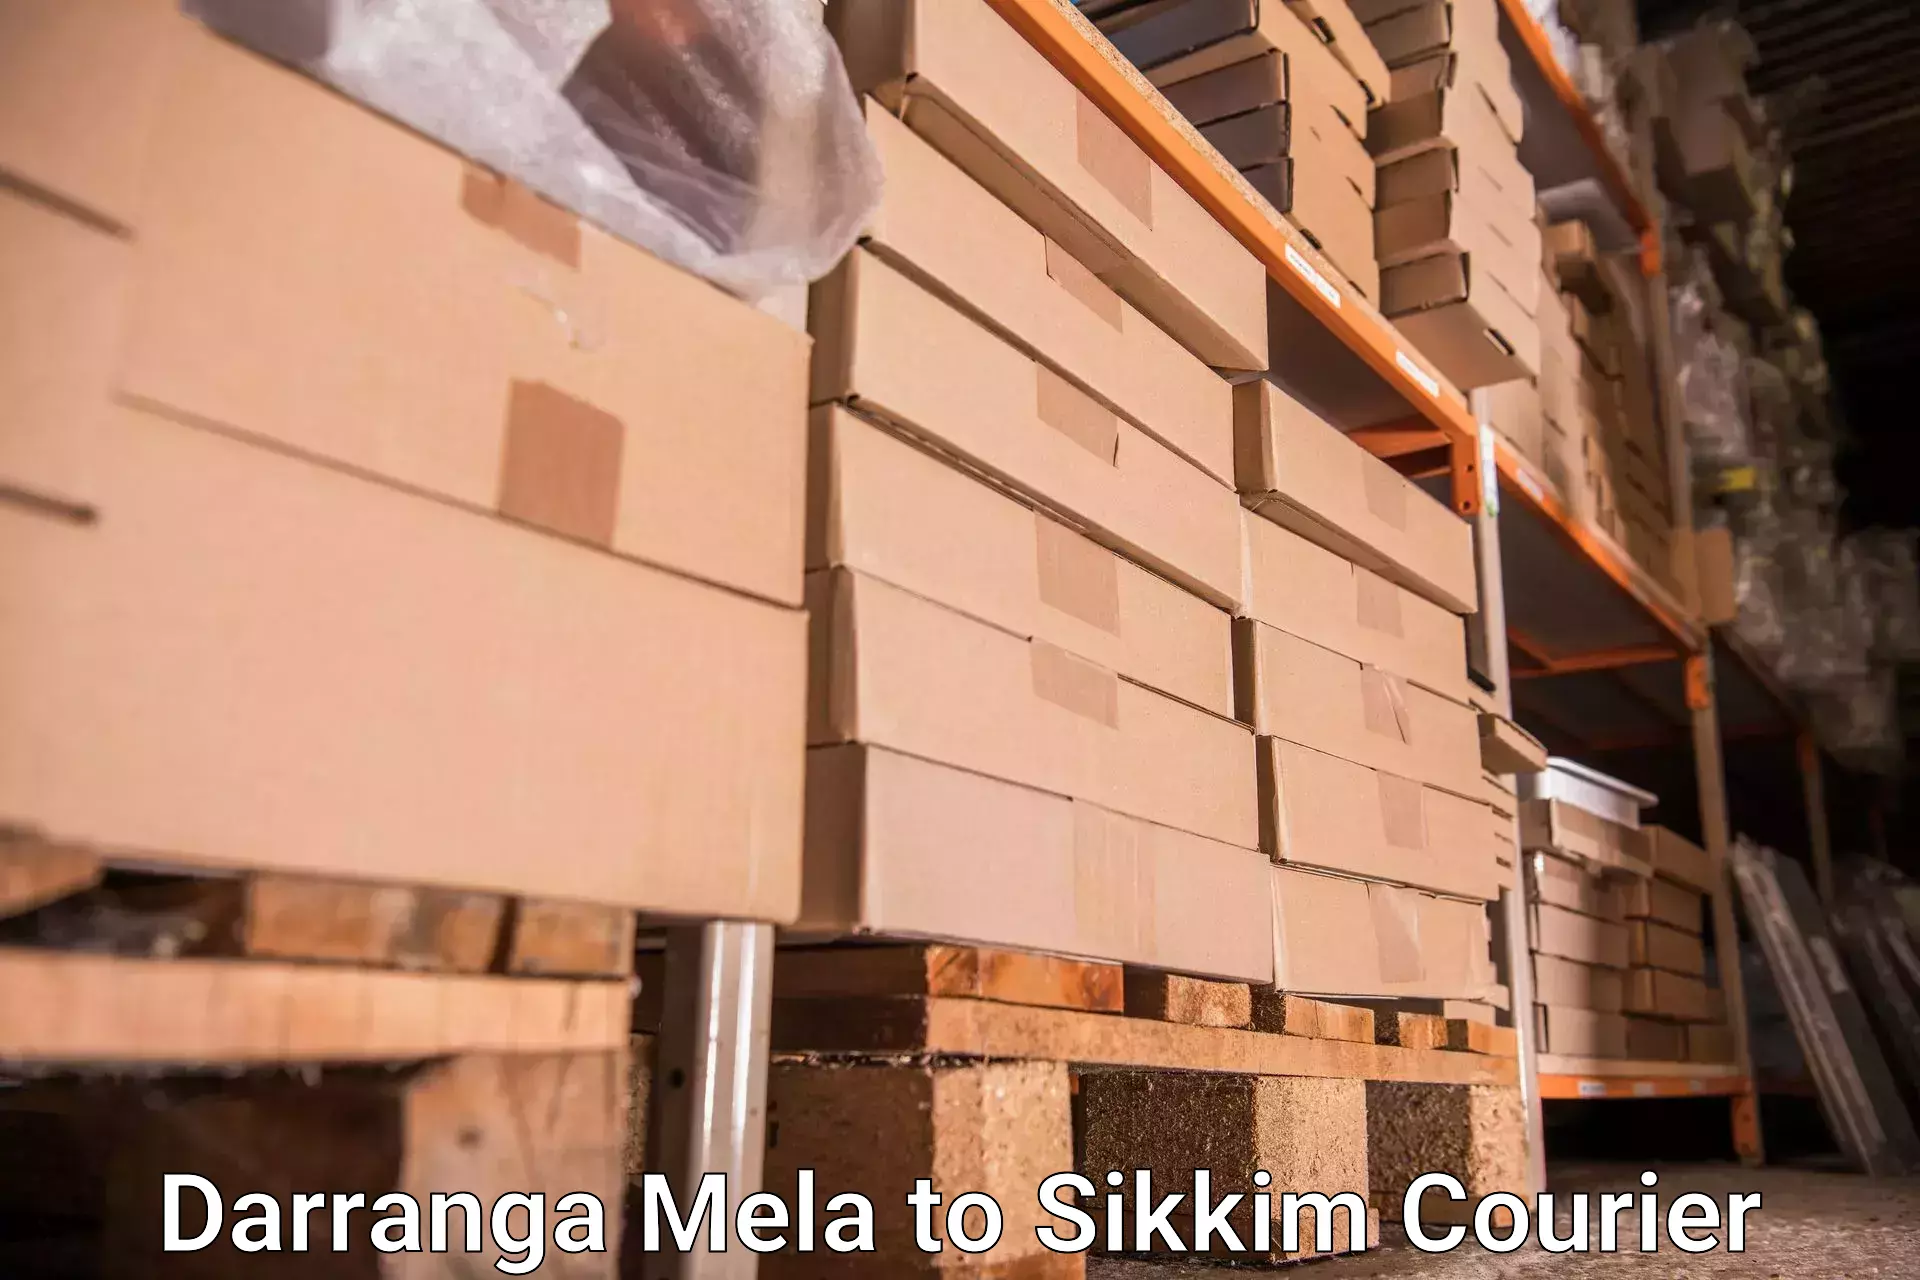 Airport luggage delivery in Darranga Mela to Mangan